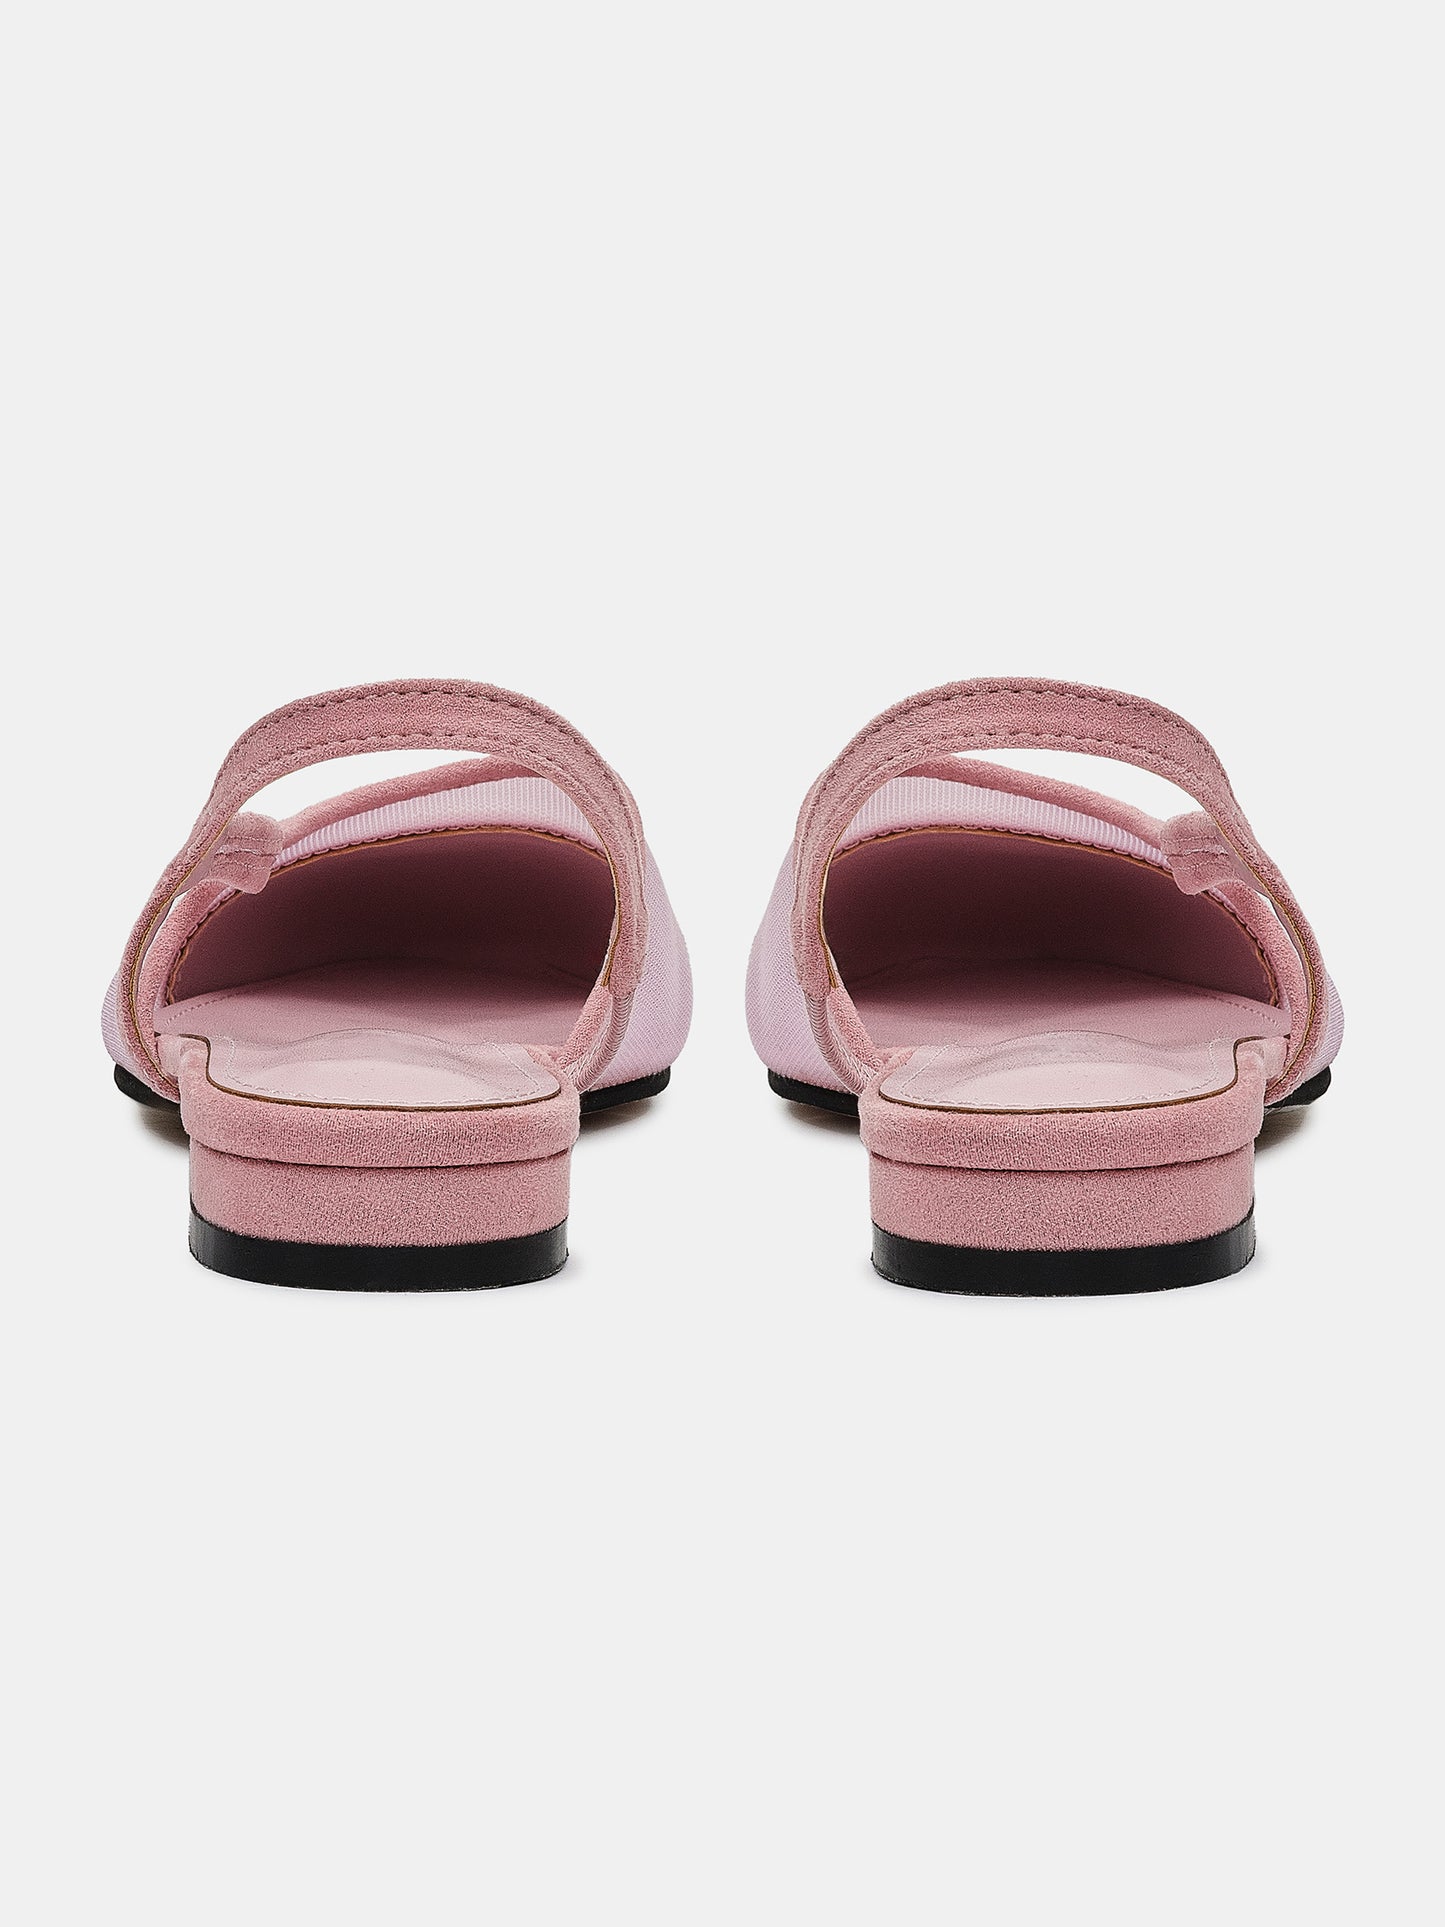 Slingback Tulle Sandals, Pink